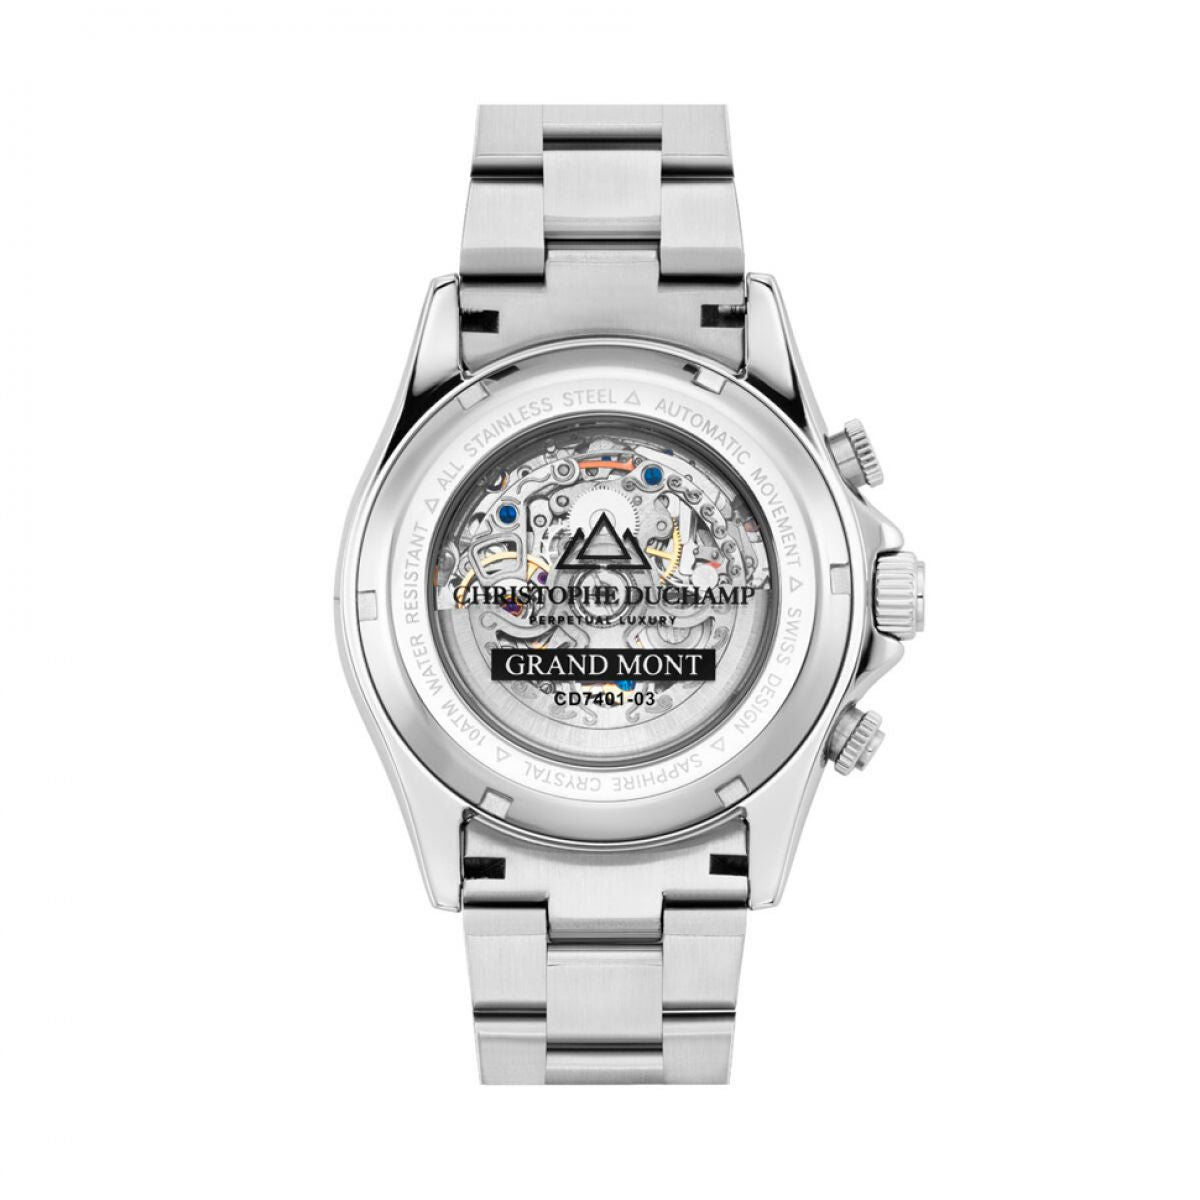 Christophe Duchamp Automatic Grand Mont Heren Horloge 46mm CD7401-3